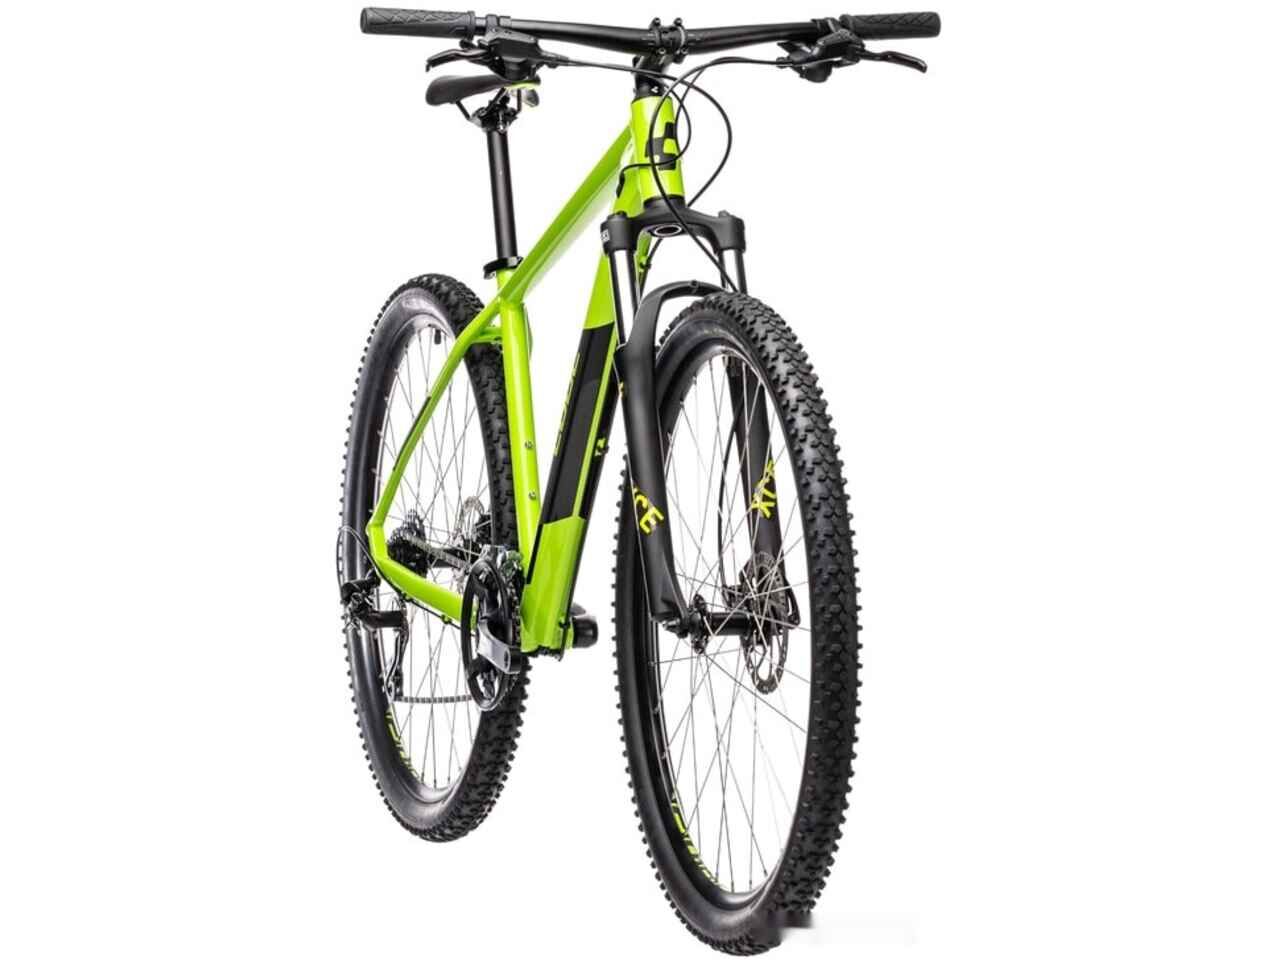 Велосипед Cube AIM Pro 29 L 2021 (зеленый)